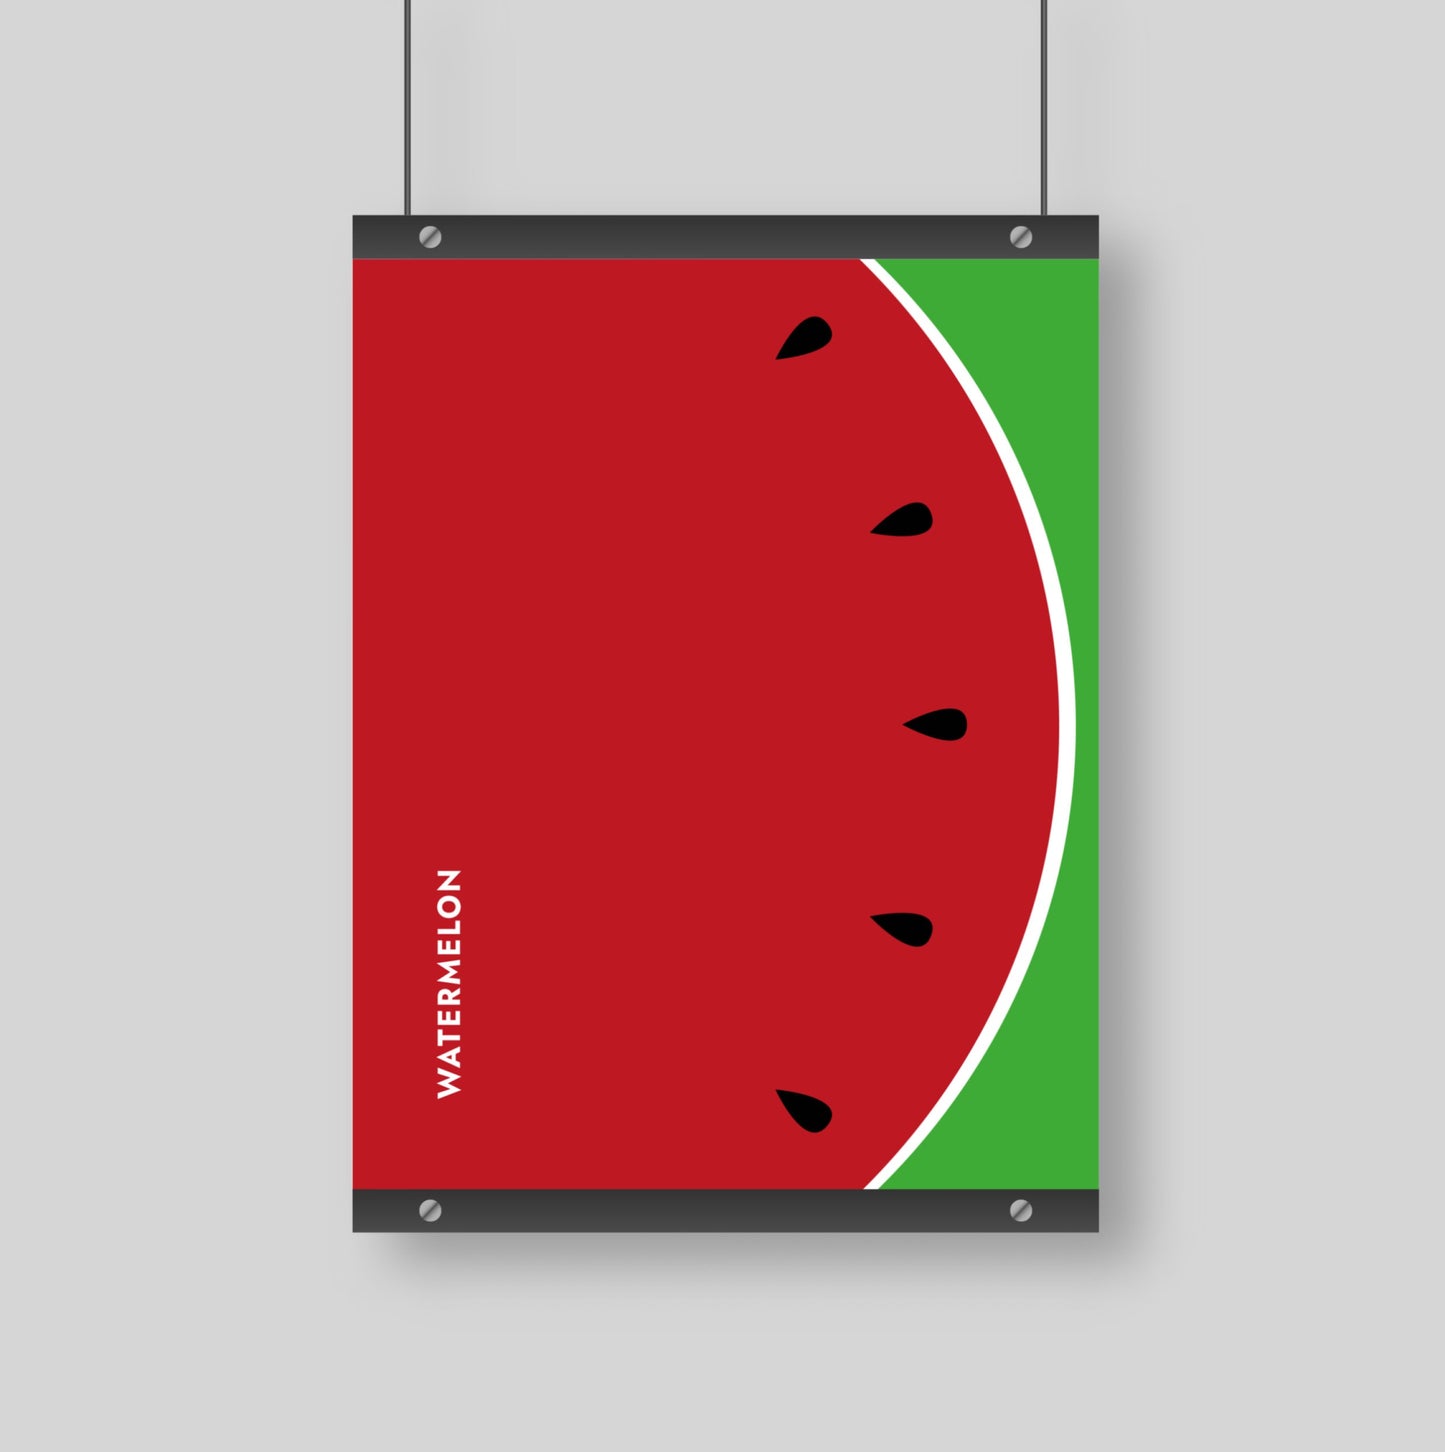 Poster Obst & Gemüse - Watermelon